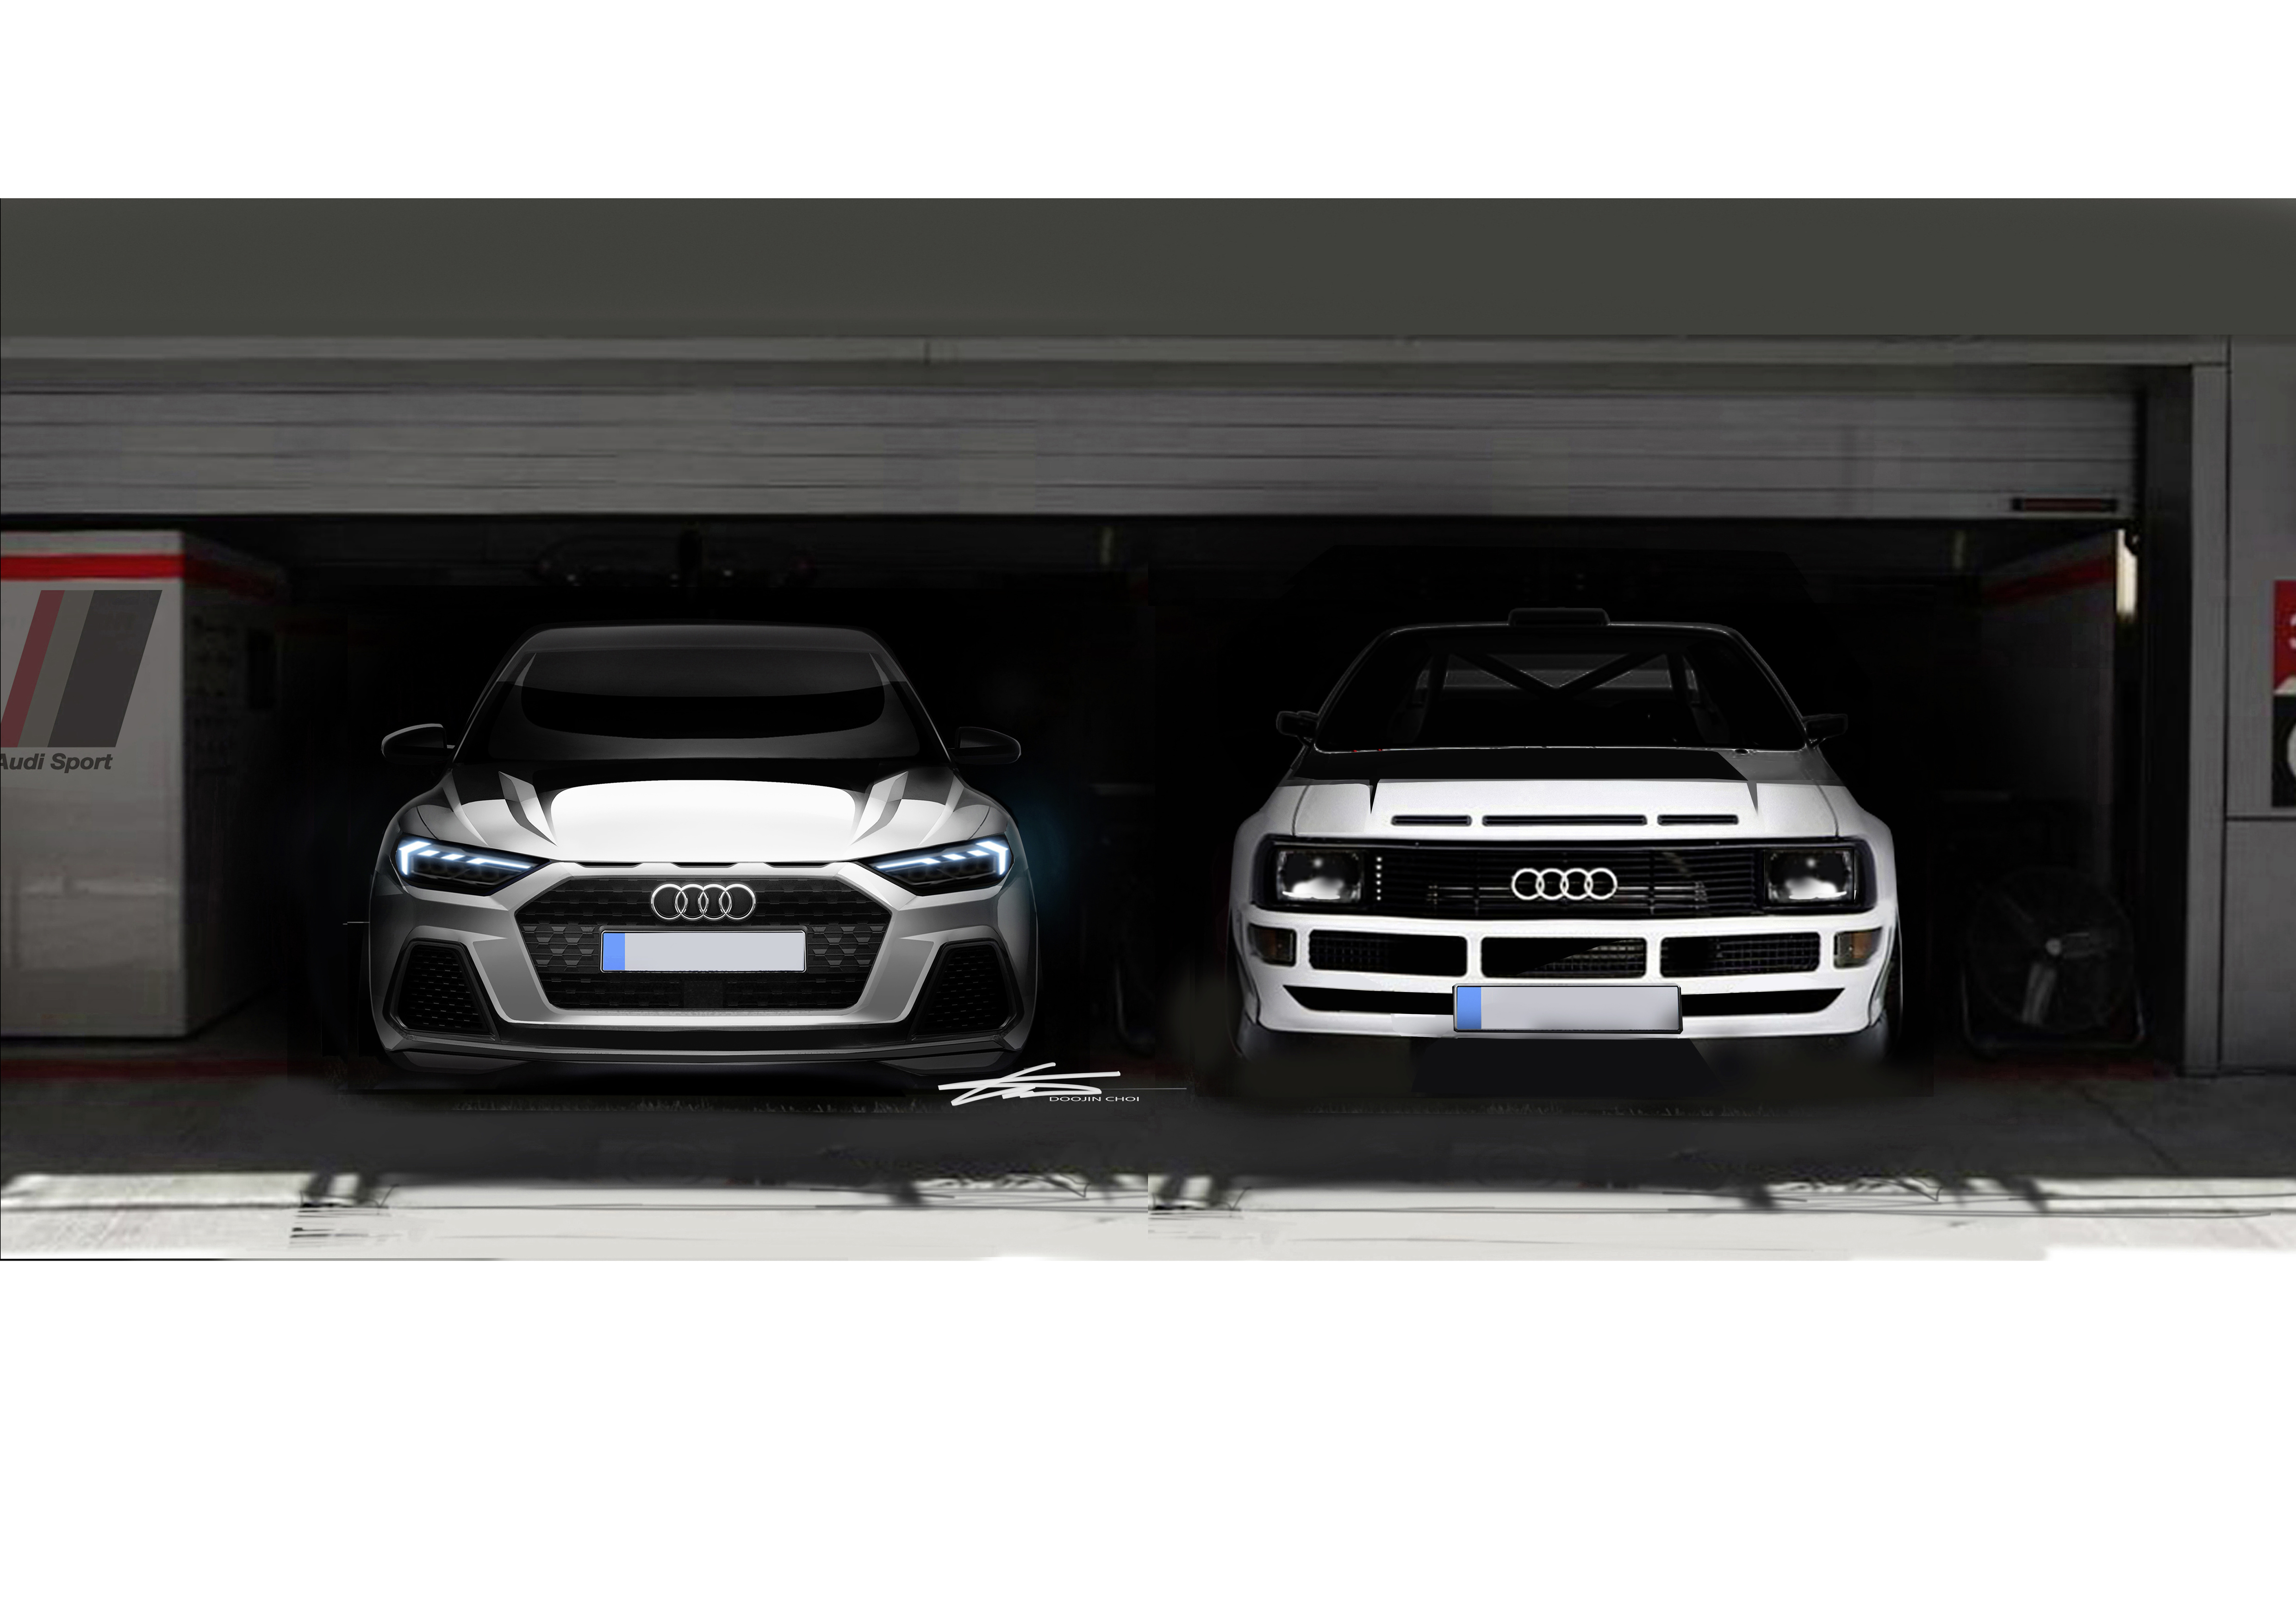 Audi A1 Sportback interior specifications